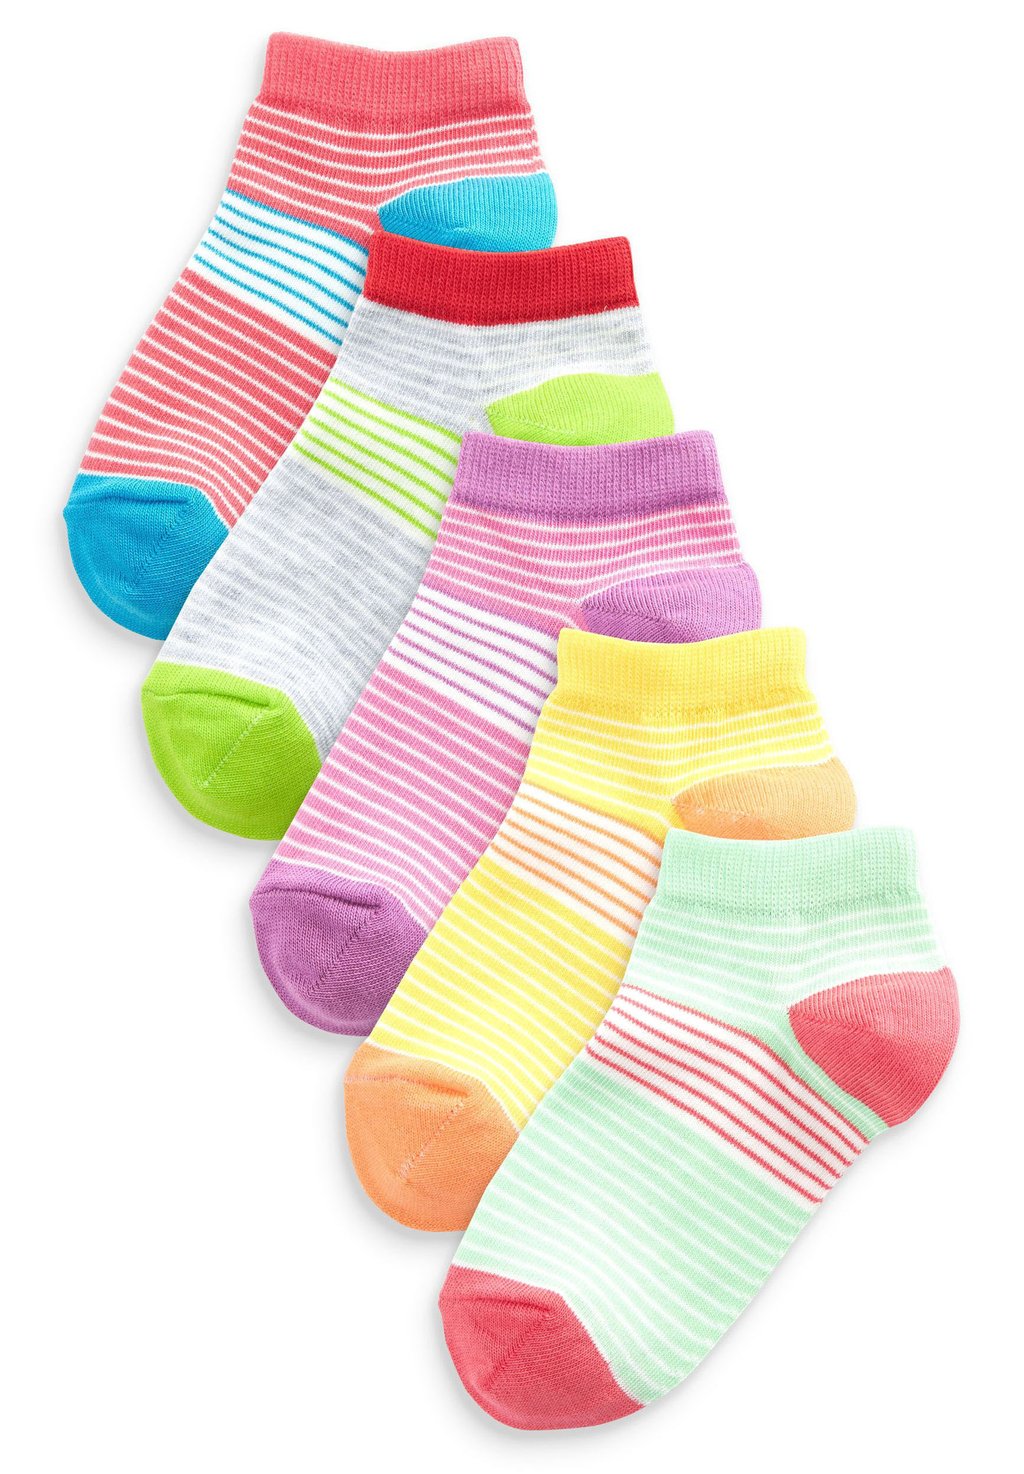 Носки 5 Pack Cotton Rich Bright Stripe Trainer Socks Next, мультиколор носки 7 pack rich trainer next цвет white bright heel and toe